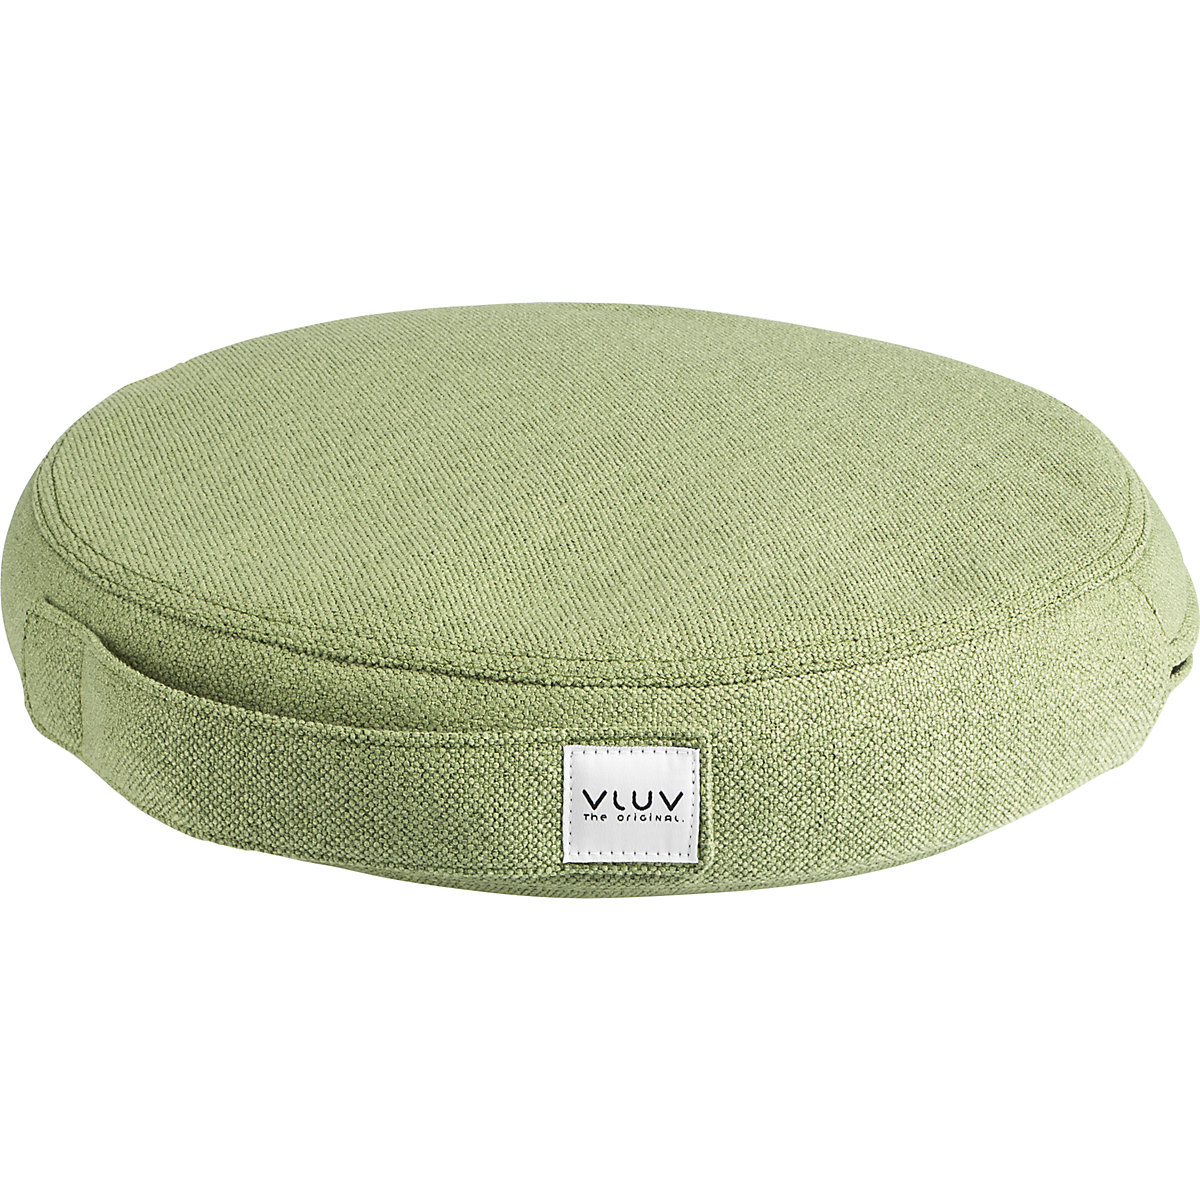 PIL&PED SOVA balance cushion – VLUV, with fabric cover, Ø 360 mm, pesto green